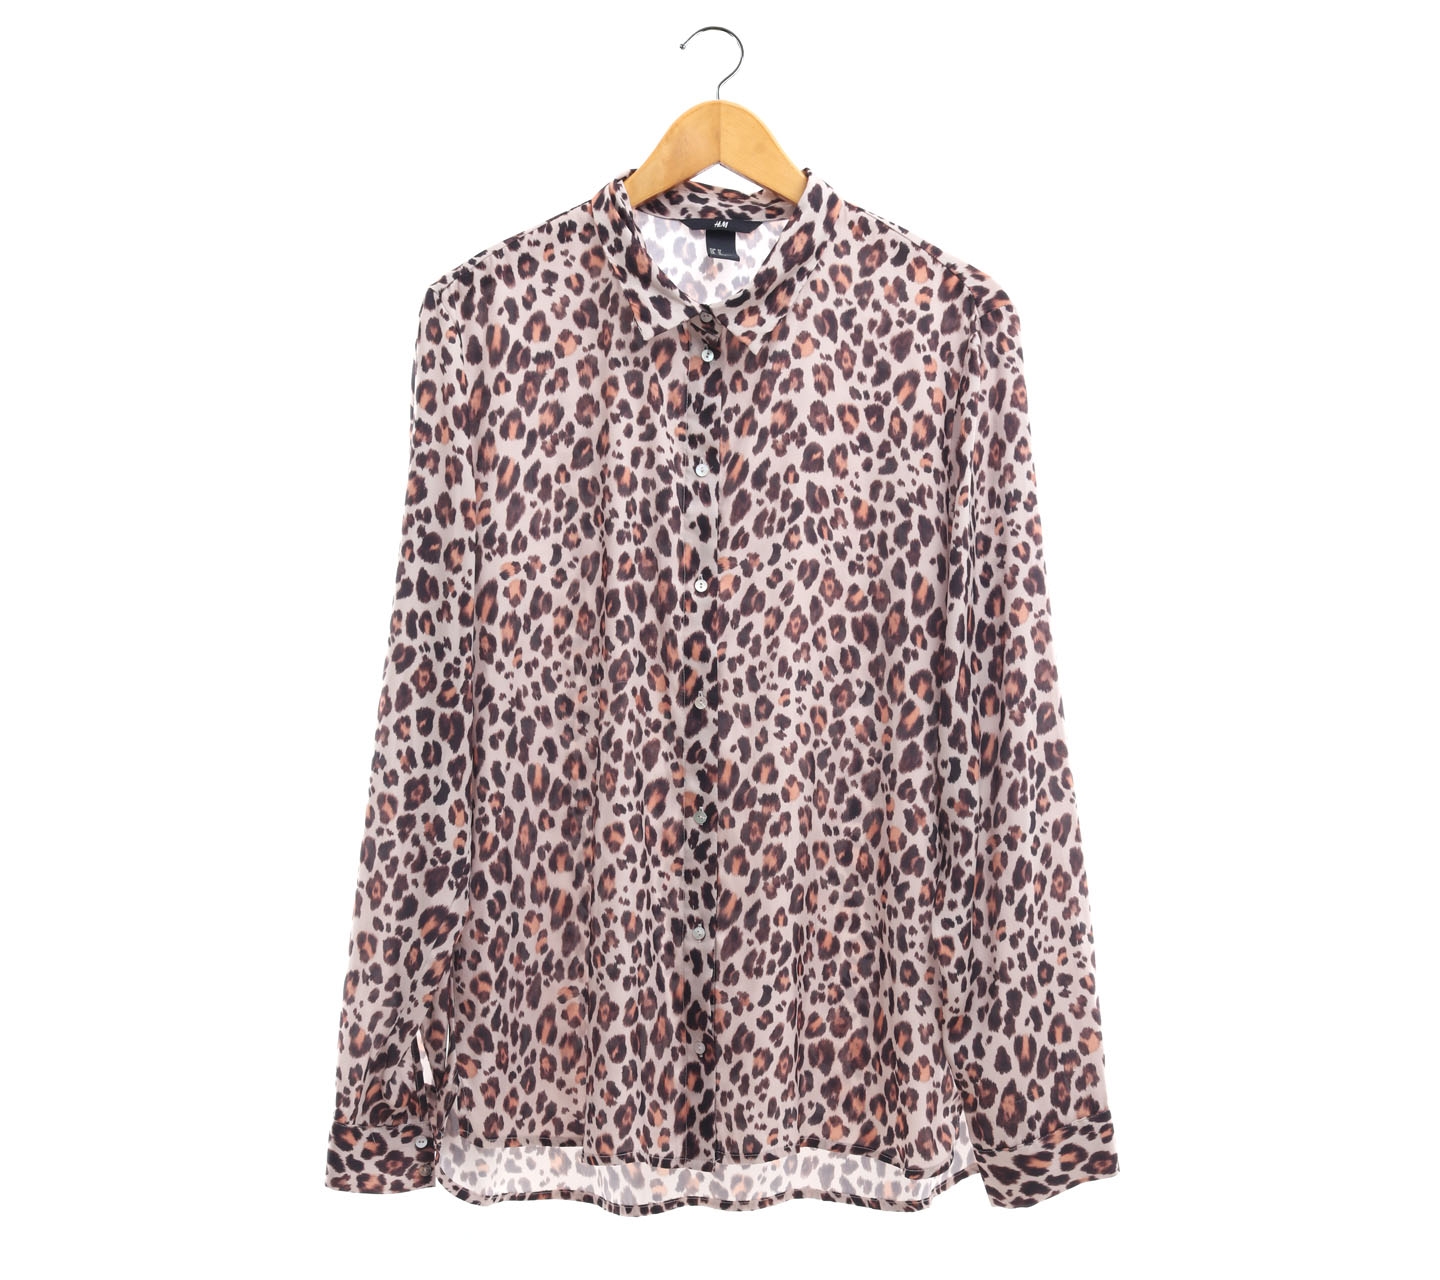 H&M Brown Leopard Printed Shirt